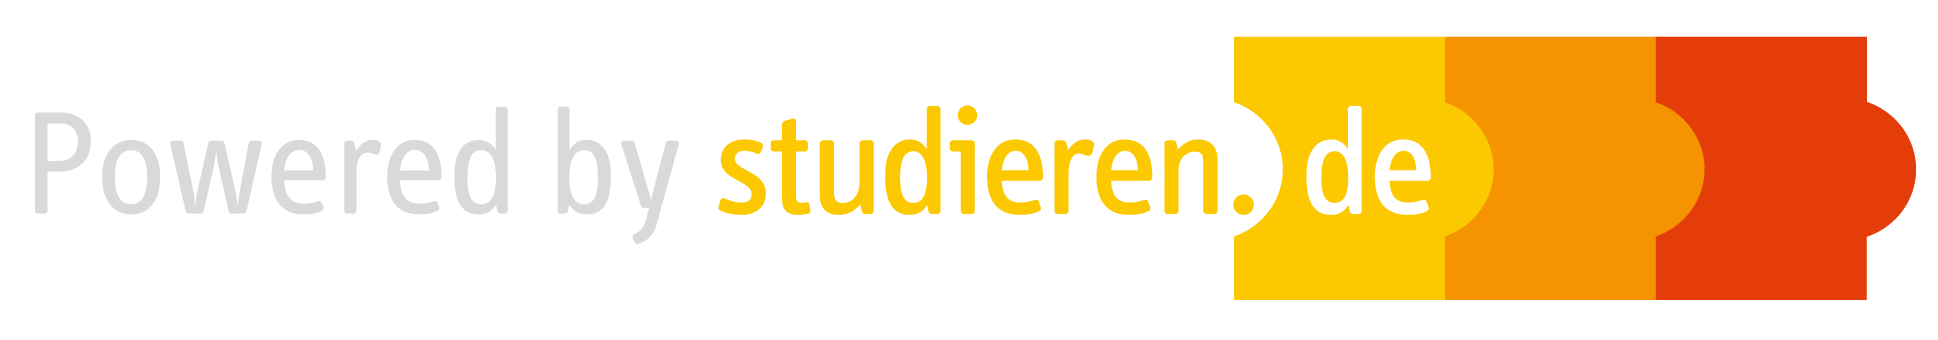 logo: powered by studieren.de